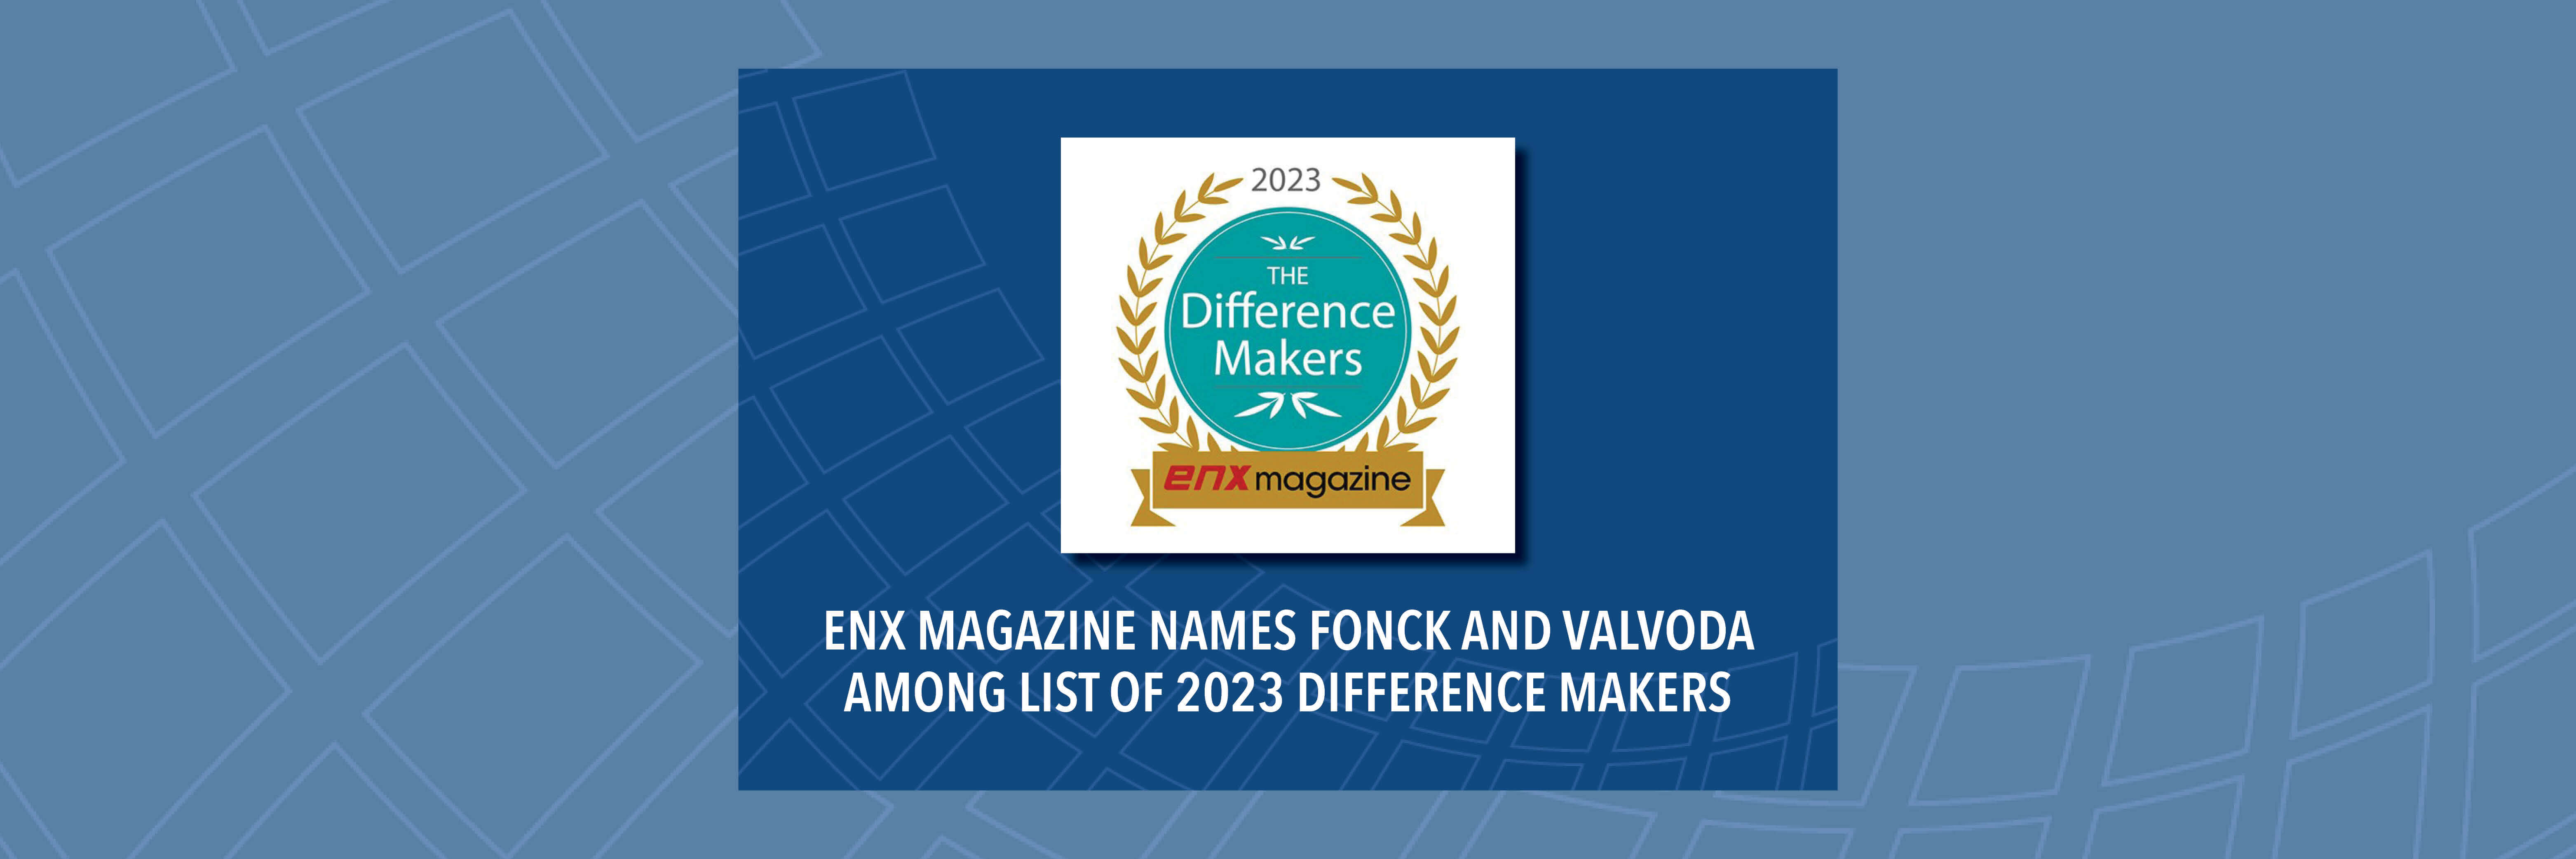 Fonck & Valvoda Named 2023 Difference Makers, ENX Magazine